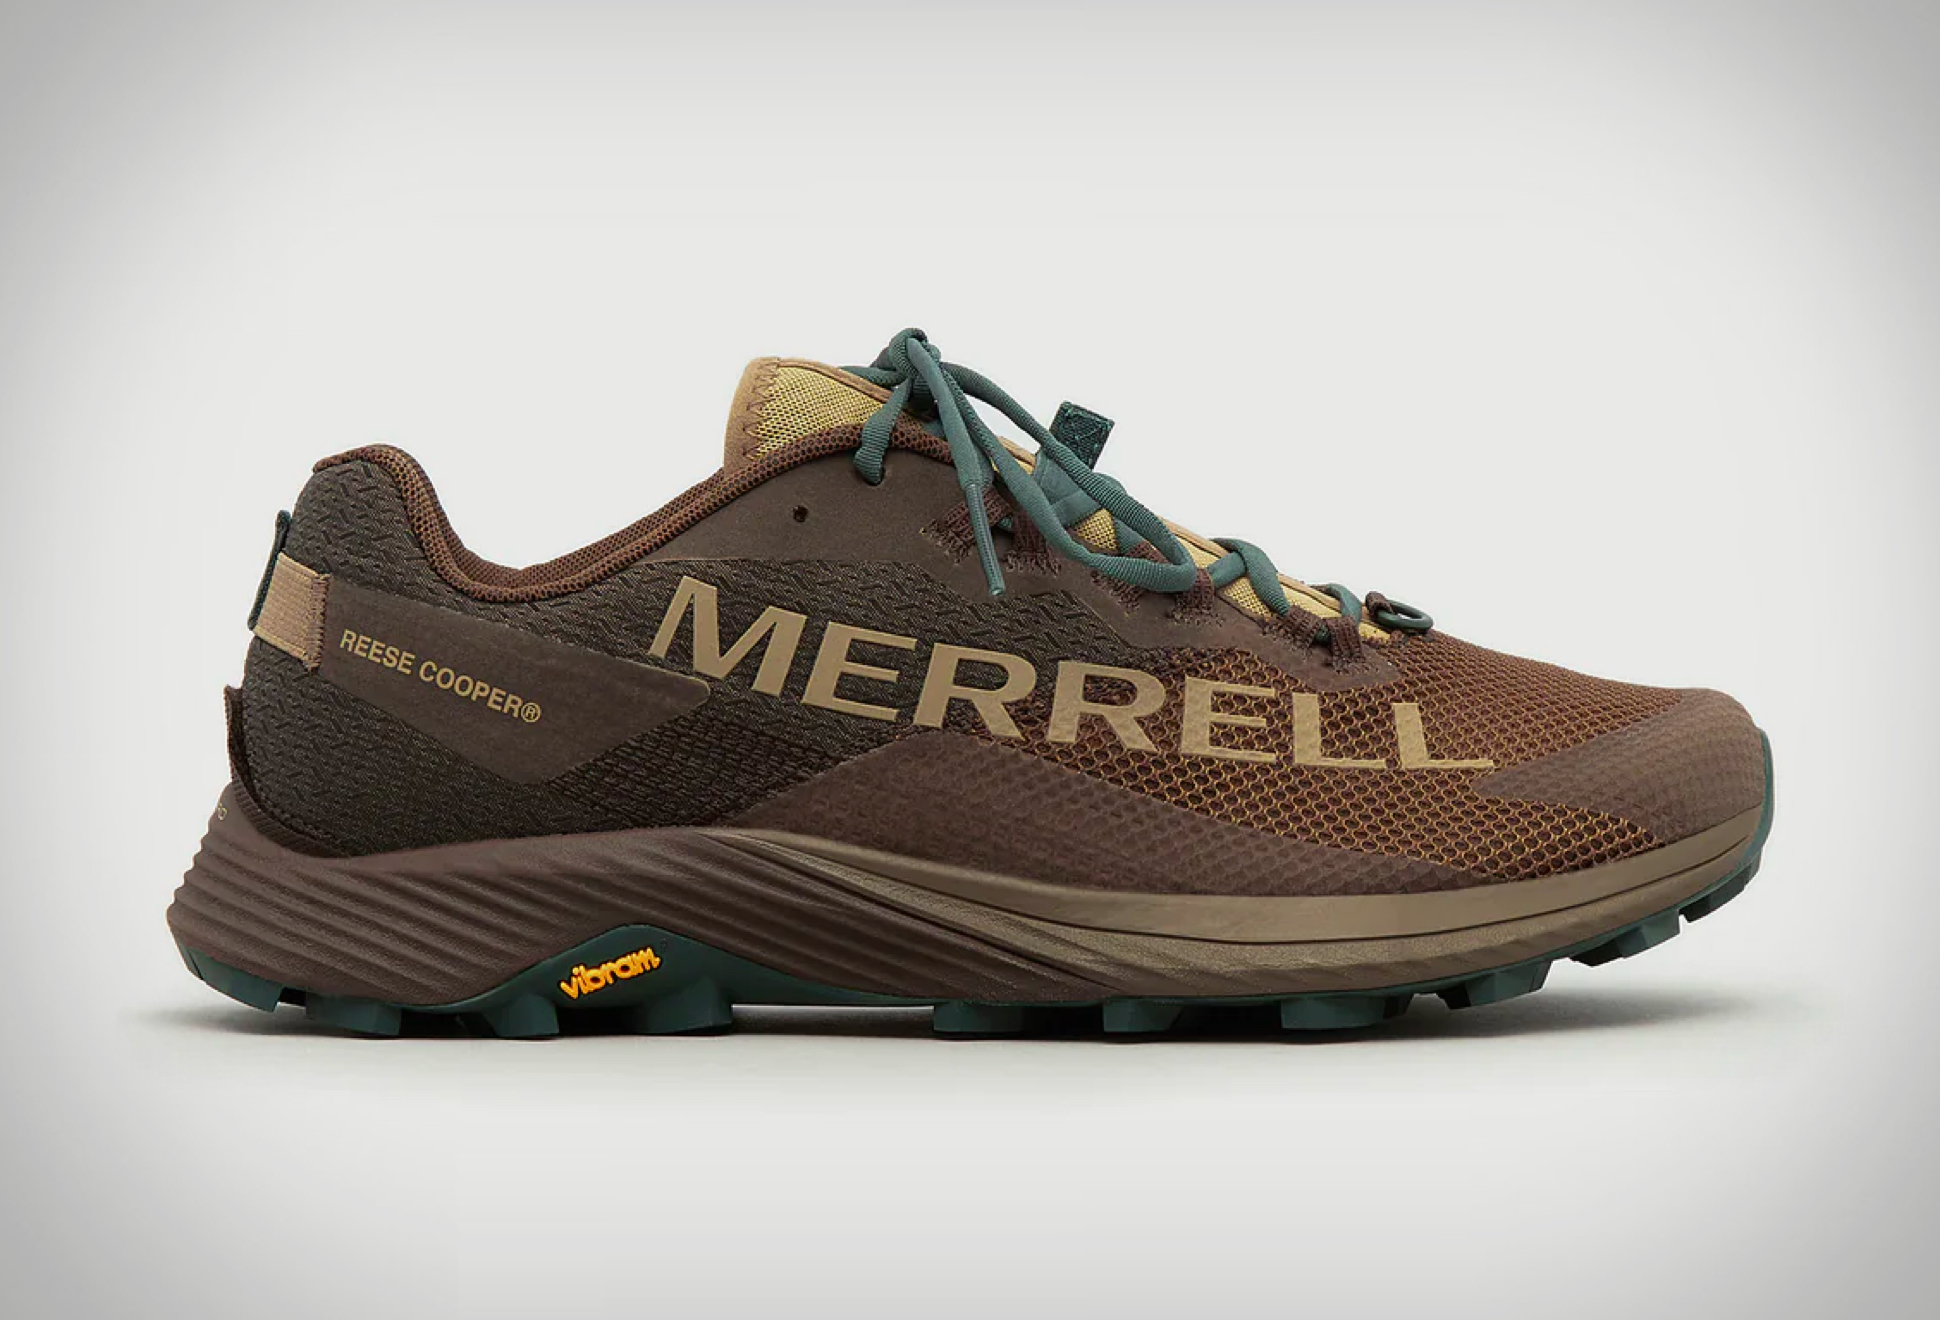 RC x Merrell 1 TRL Sneaker | Image